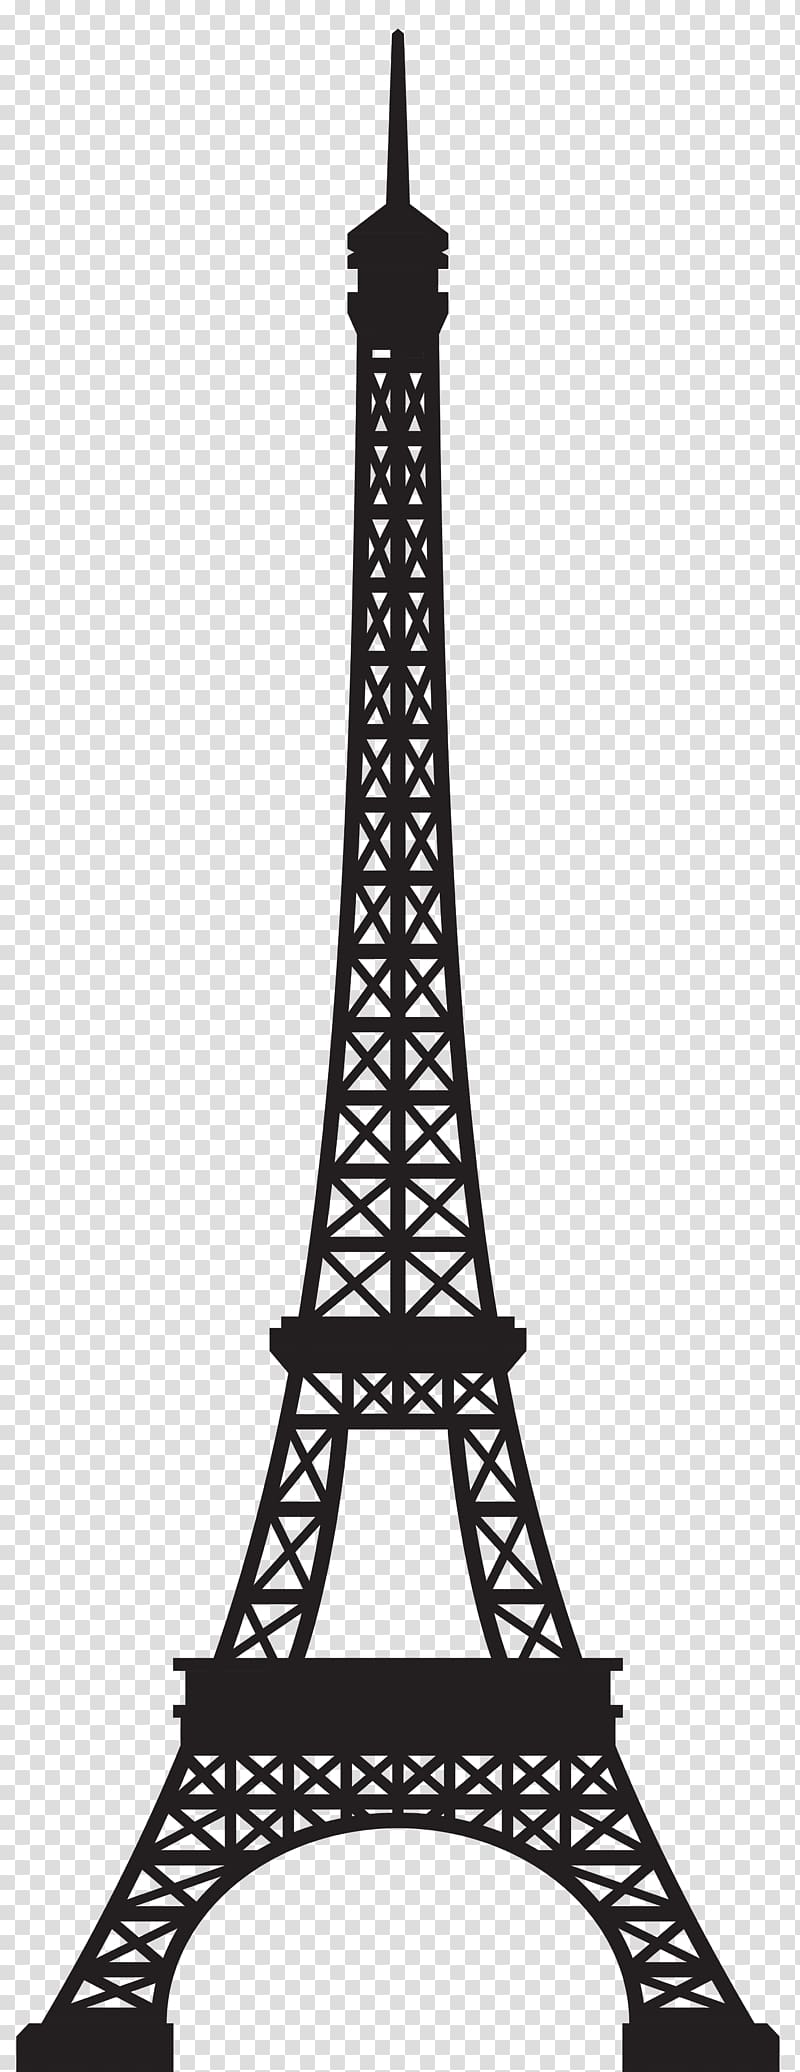 Eiffel Tower Landmark , Eiffel Tower Silhouette , black Eiffel Tower illustration transparent background PNG clipart